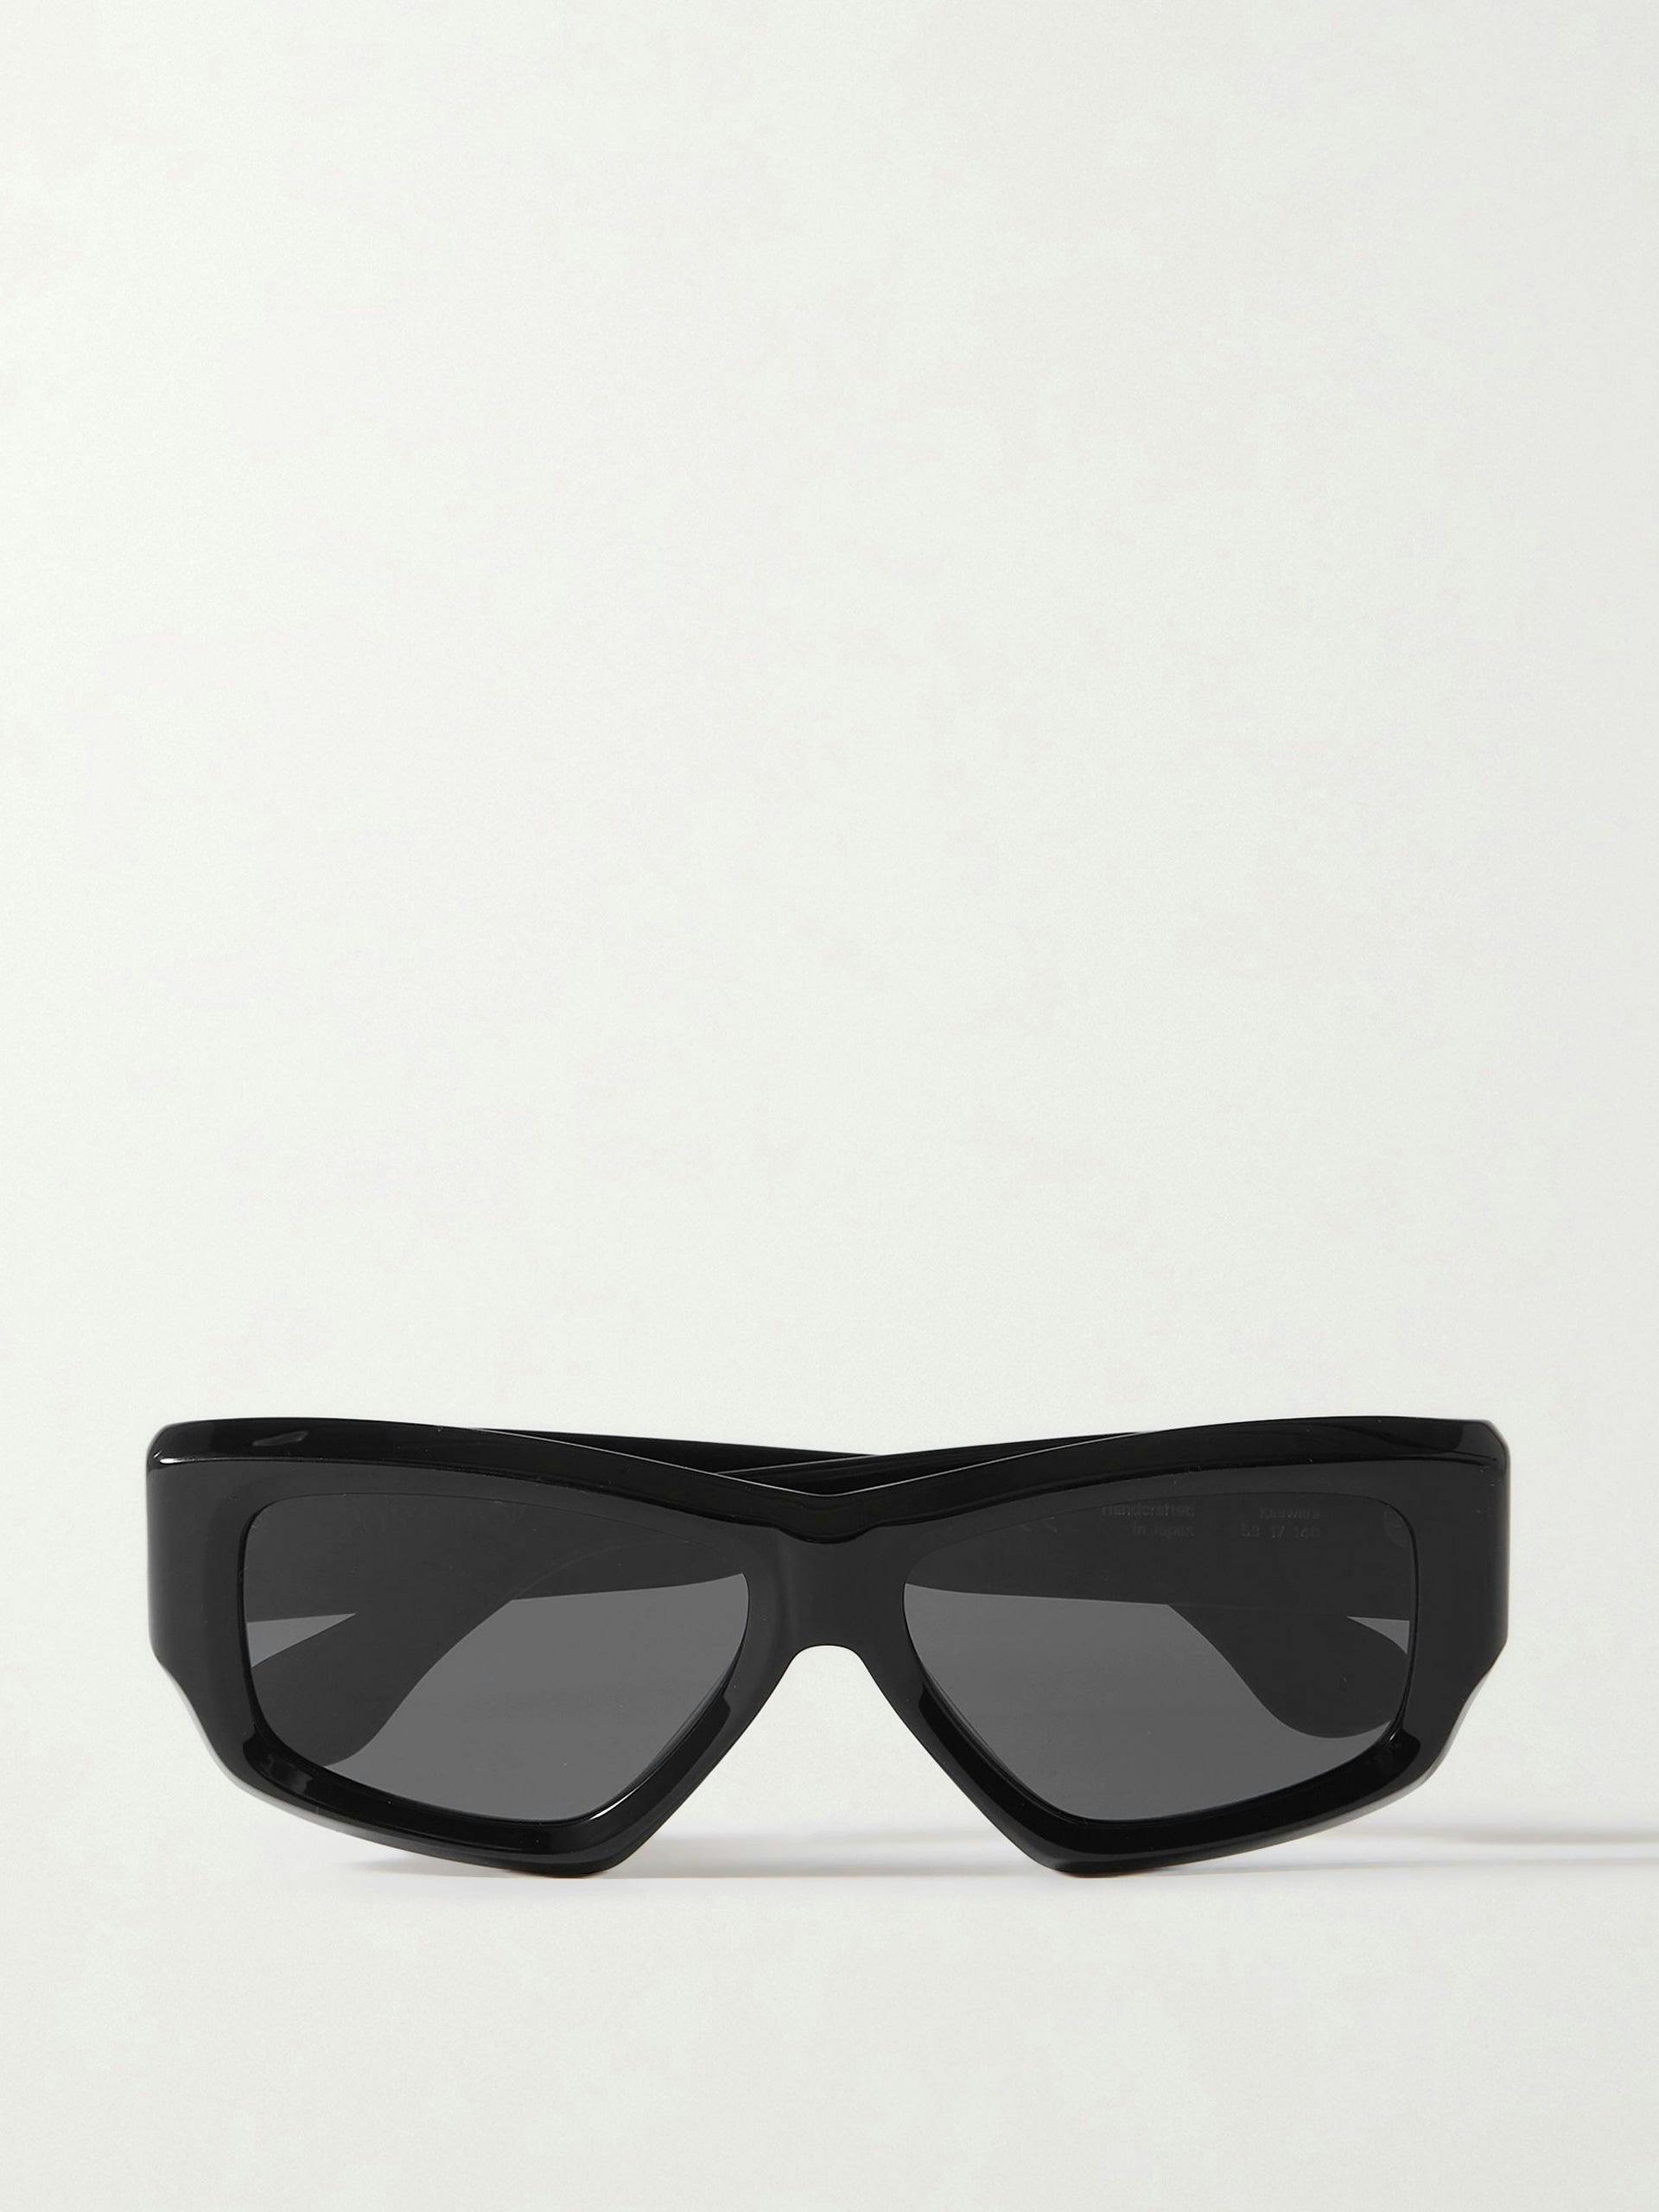 Black D-frame acetate sunglasses